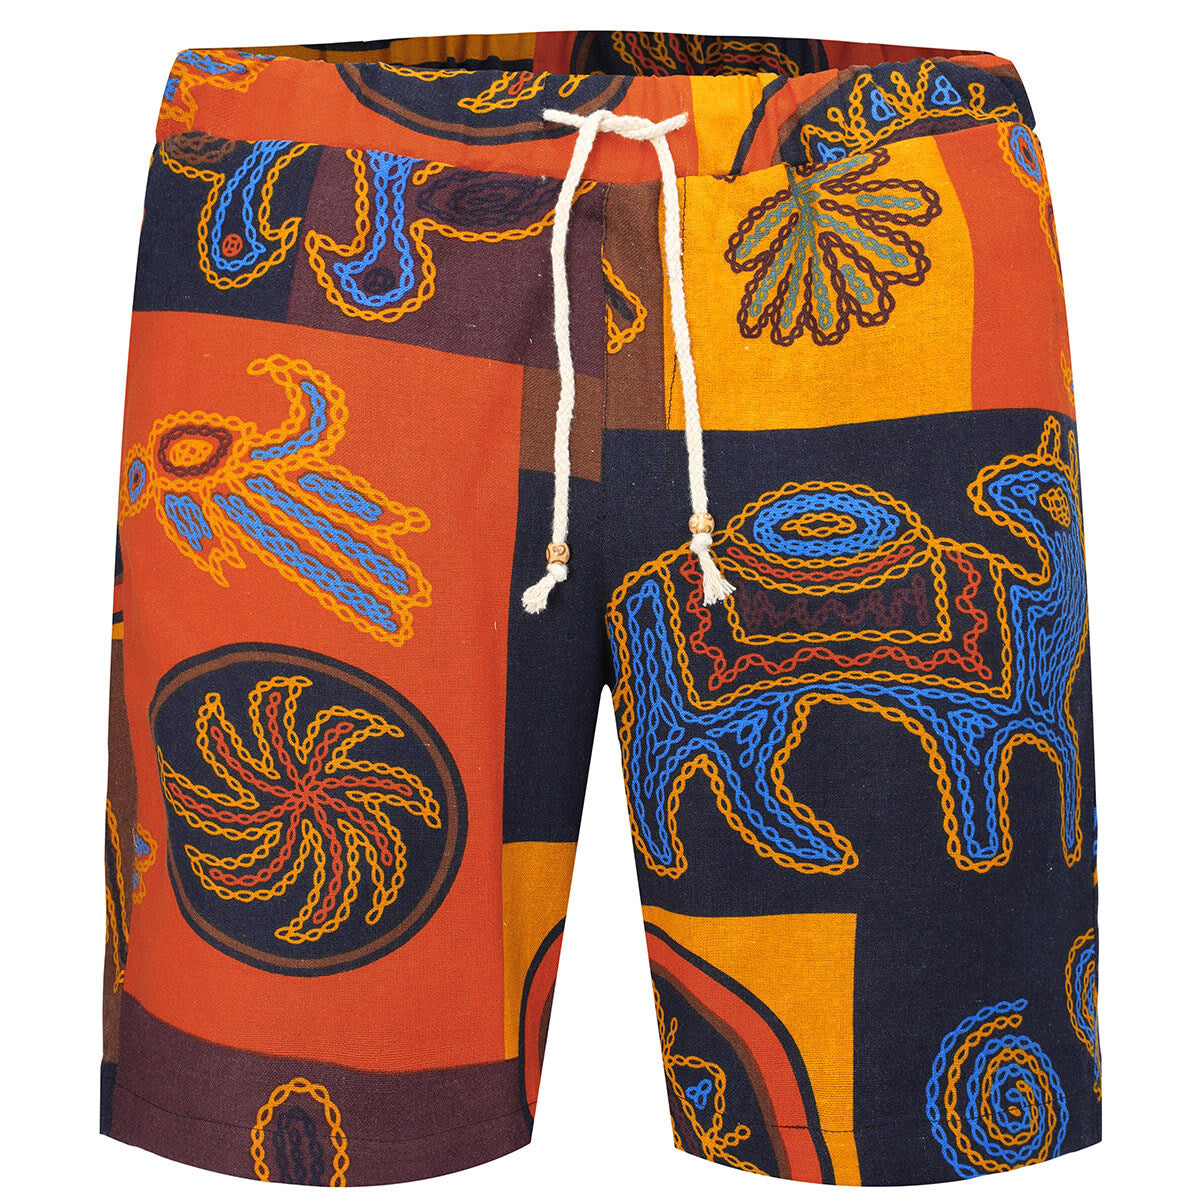 2-Piece Egyptian Style Hawaii Summer Suit